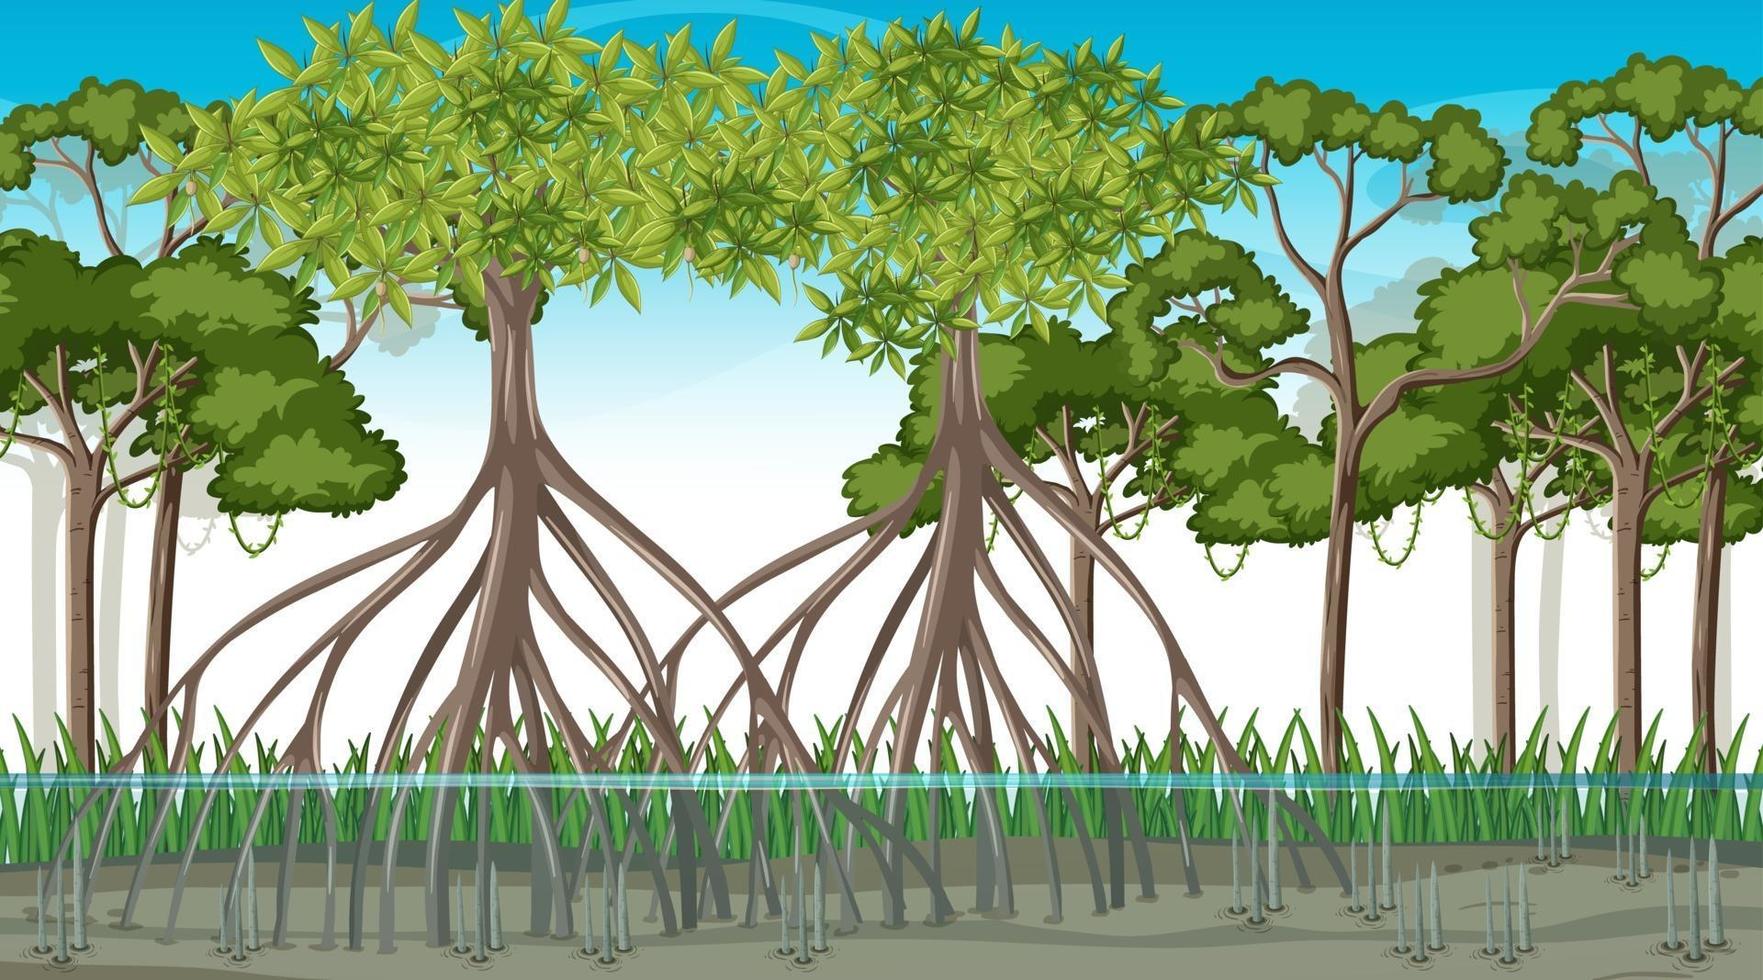 natuurtafereel met mangrovebos overdag in cartoonstijl vector